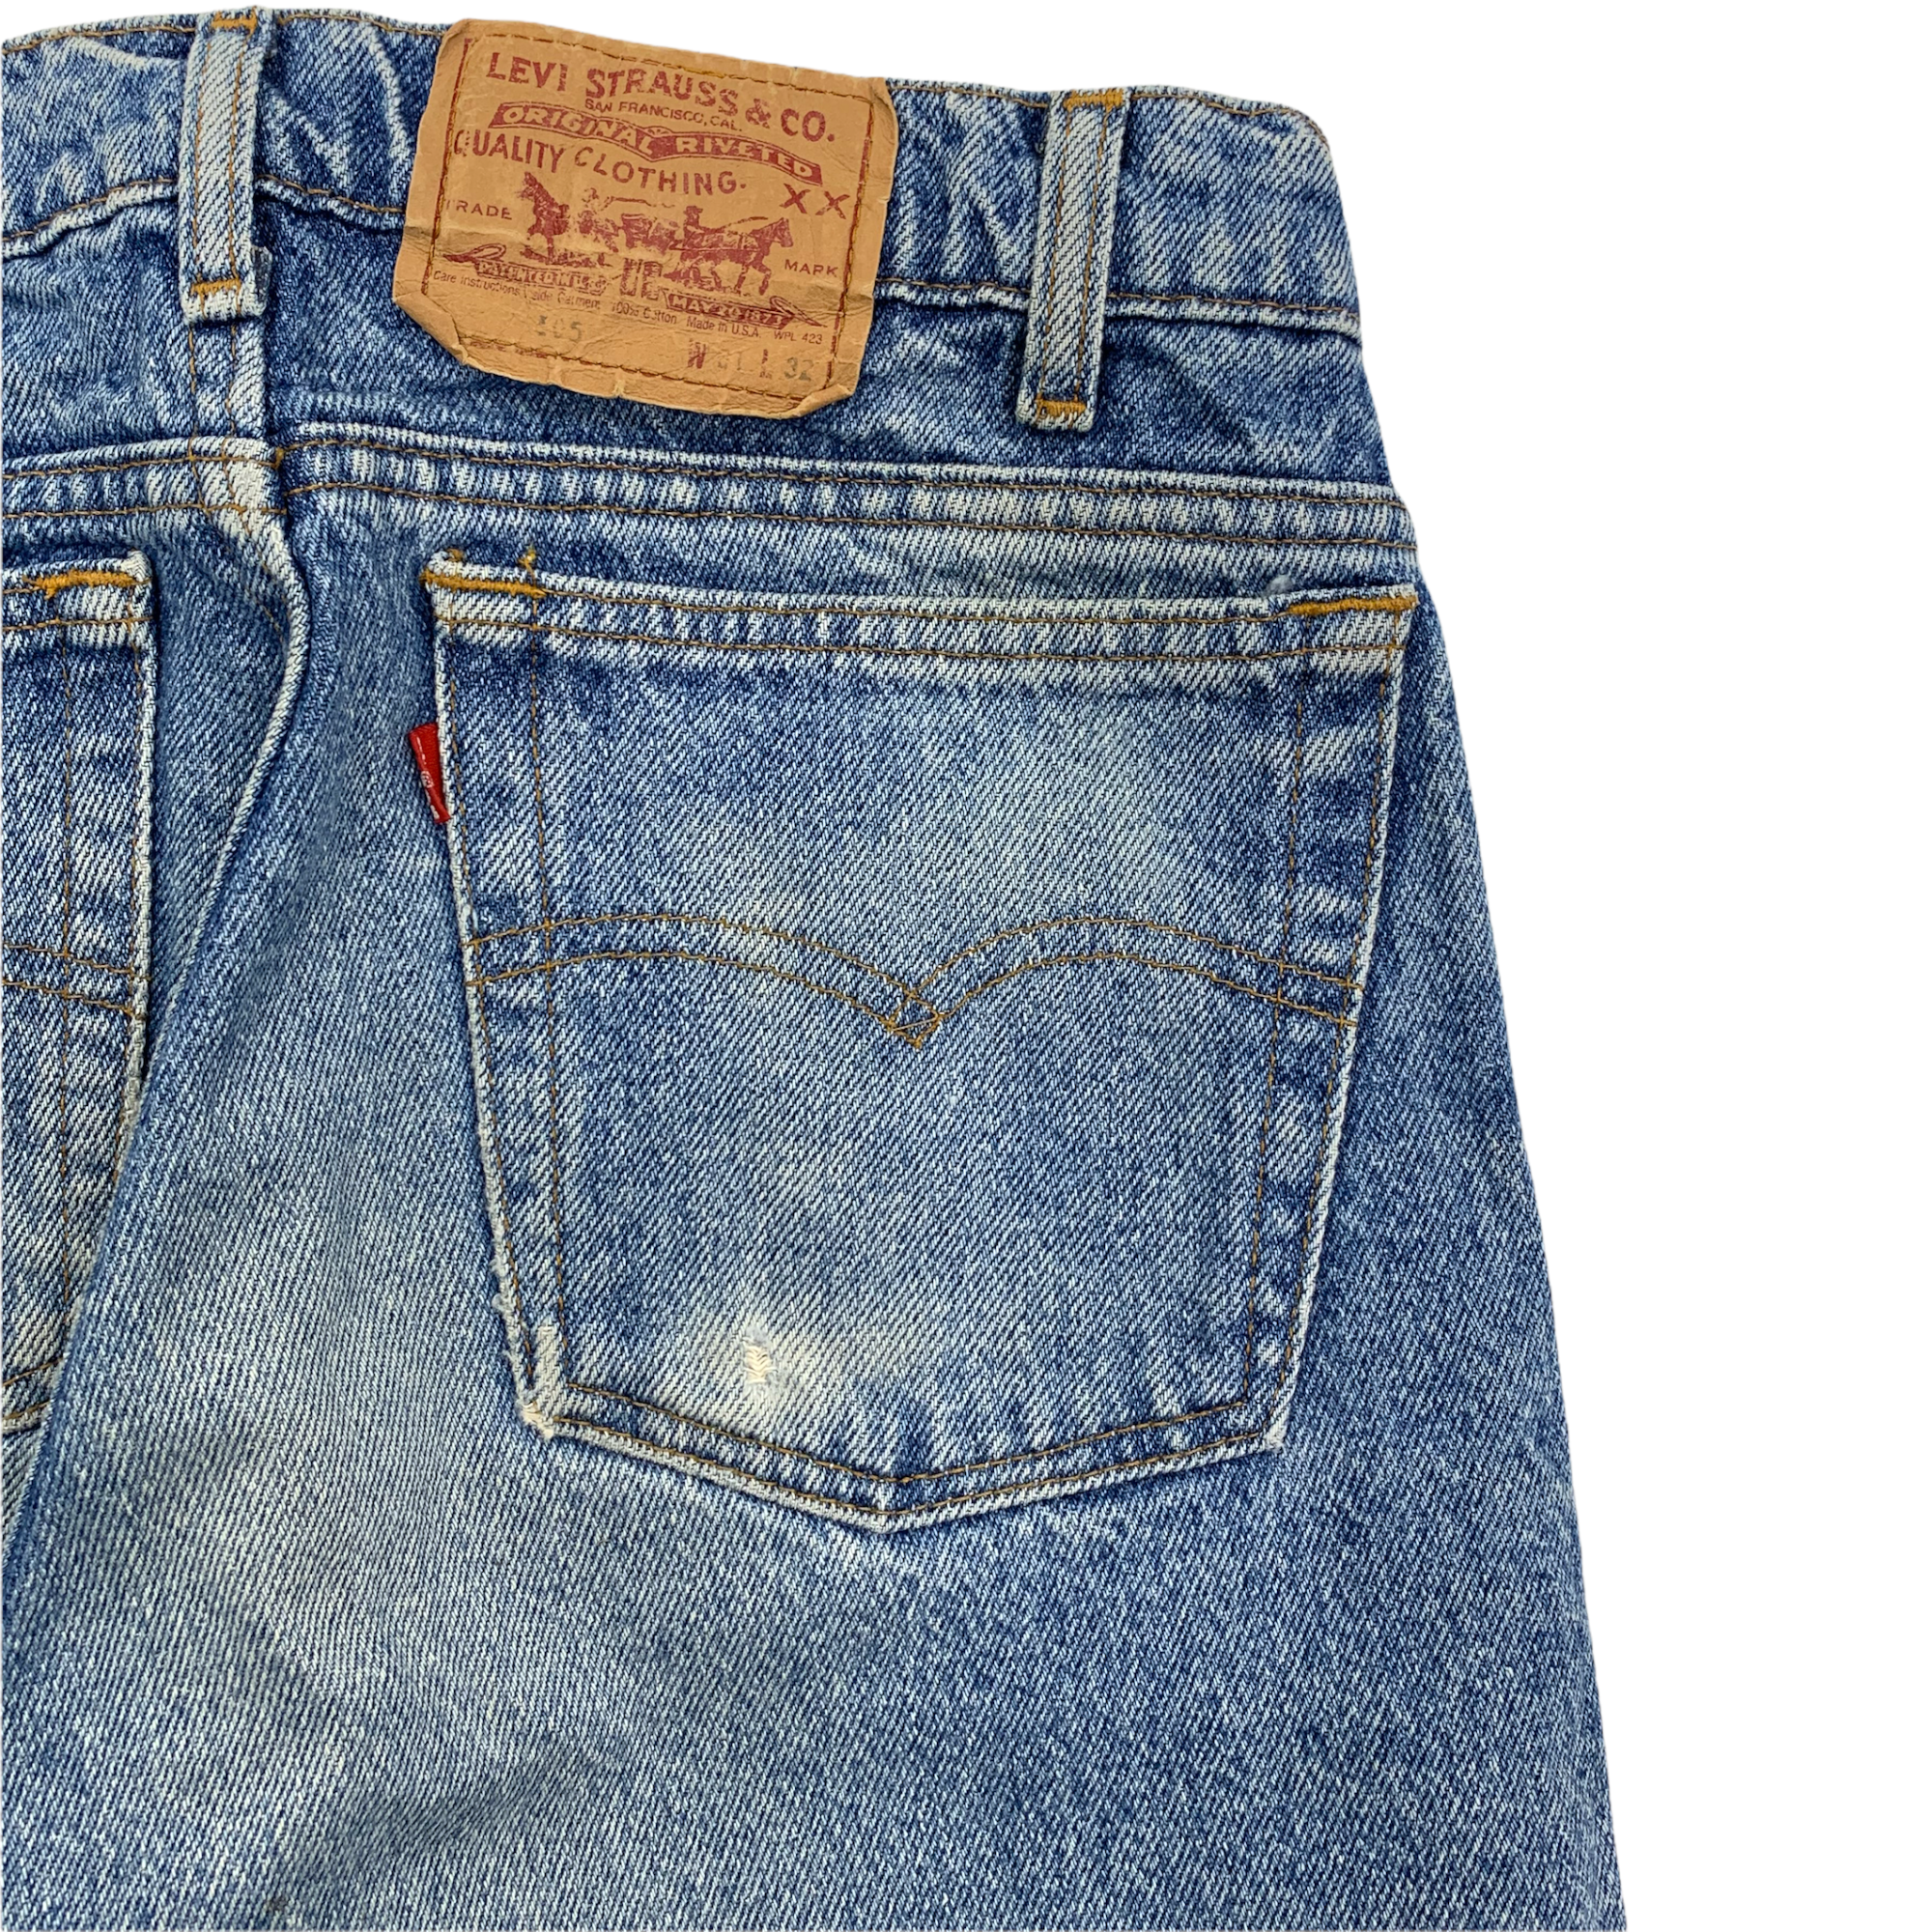 Faded ‘90s Levi’s 505 Denim Jeans - Medium Wash - 29x31